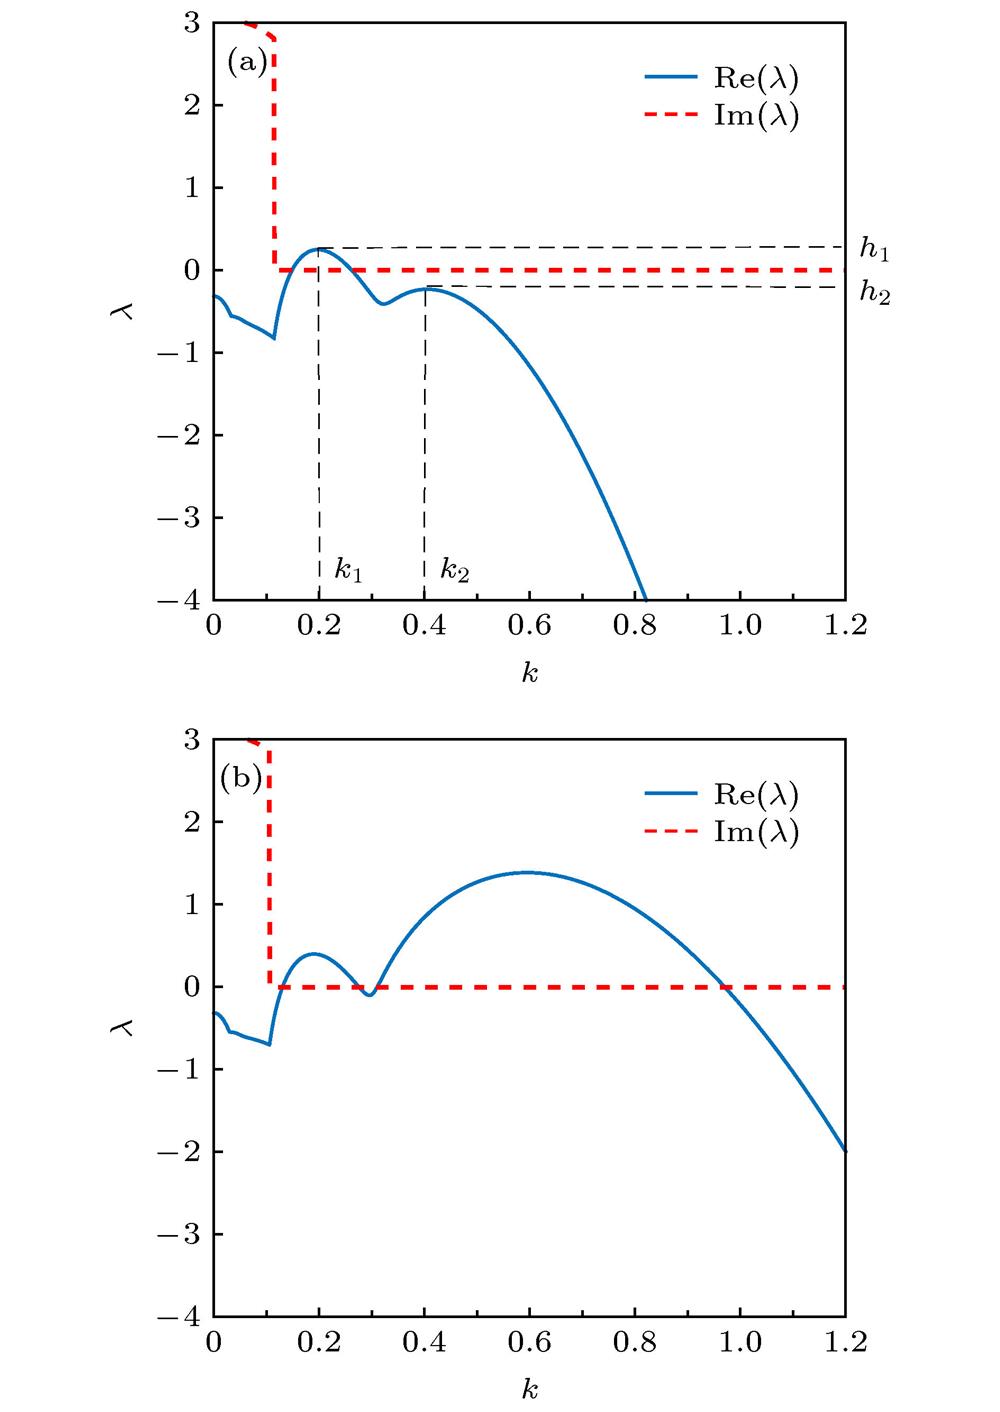 Dispersion relations of coupled systems under different parameters: (a) Du1 = 12.6, Dv1 = 27.9, Du2 = 22, Dv2 = 420, α = 0.1; (b) Du1 = 5.3, Dv1 = 20, Du2 = 22, Dv2 = 500, α = 0.1.不同参数下耦合系统的色散关系 (a) Du1 = 12.6, Dv1 = 27.9, Du2 = 22, Dv2 = 420, α = 0.1; (b) Du1 = 5.3, Dv1 = 20, Du2 = 22, Dv2 = 500, α = 0.1